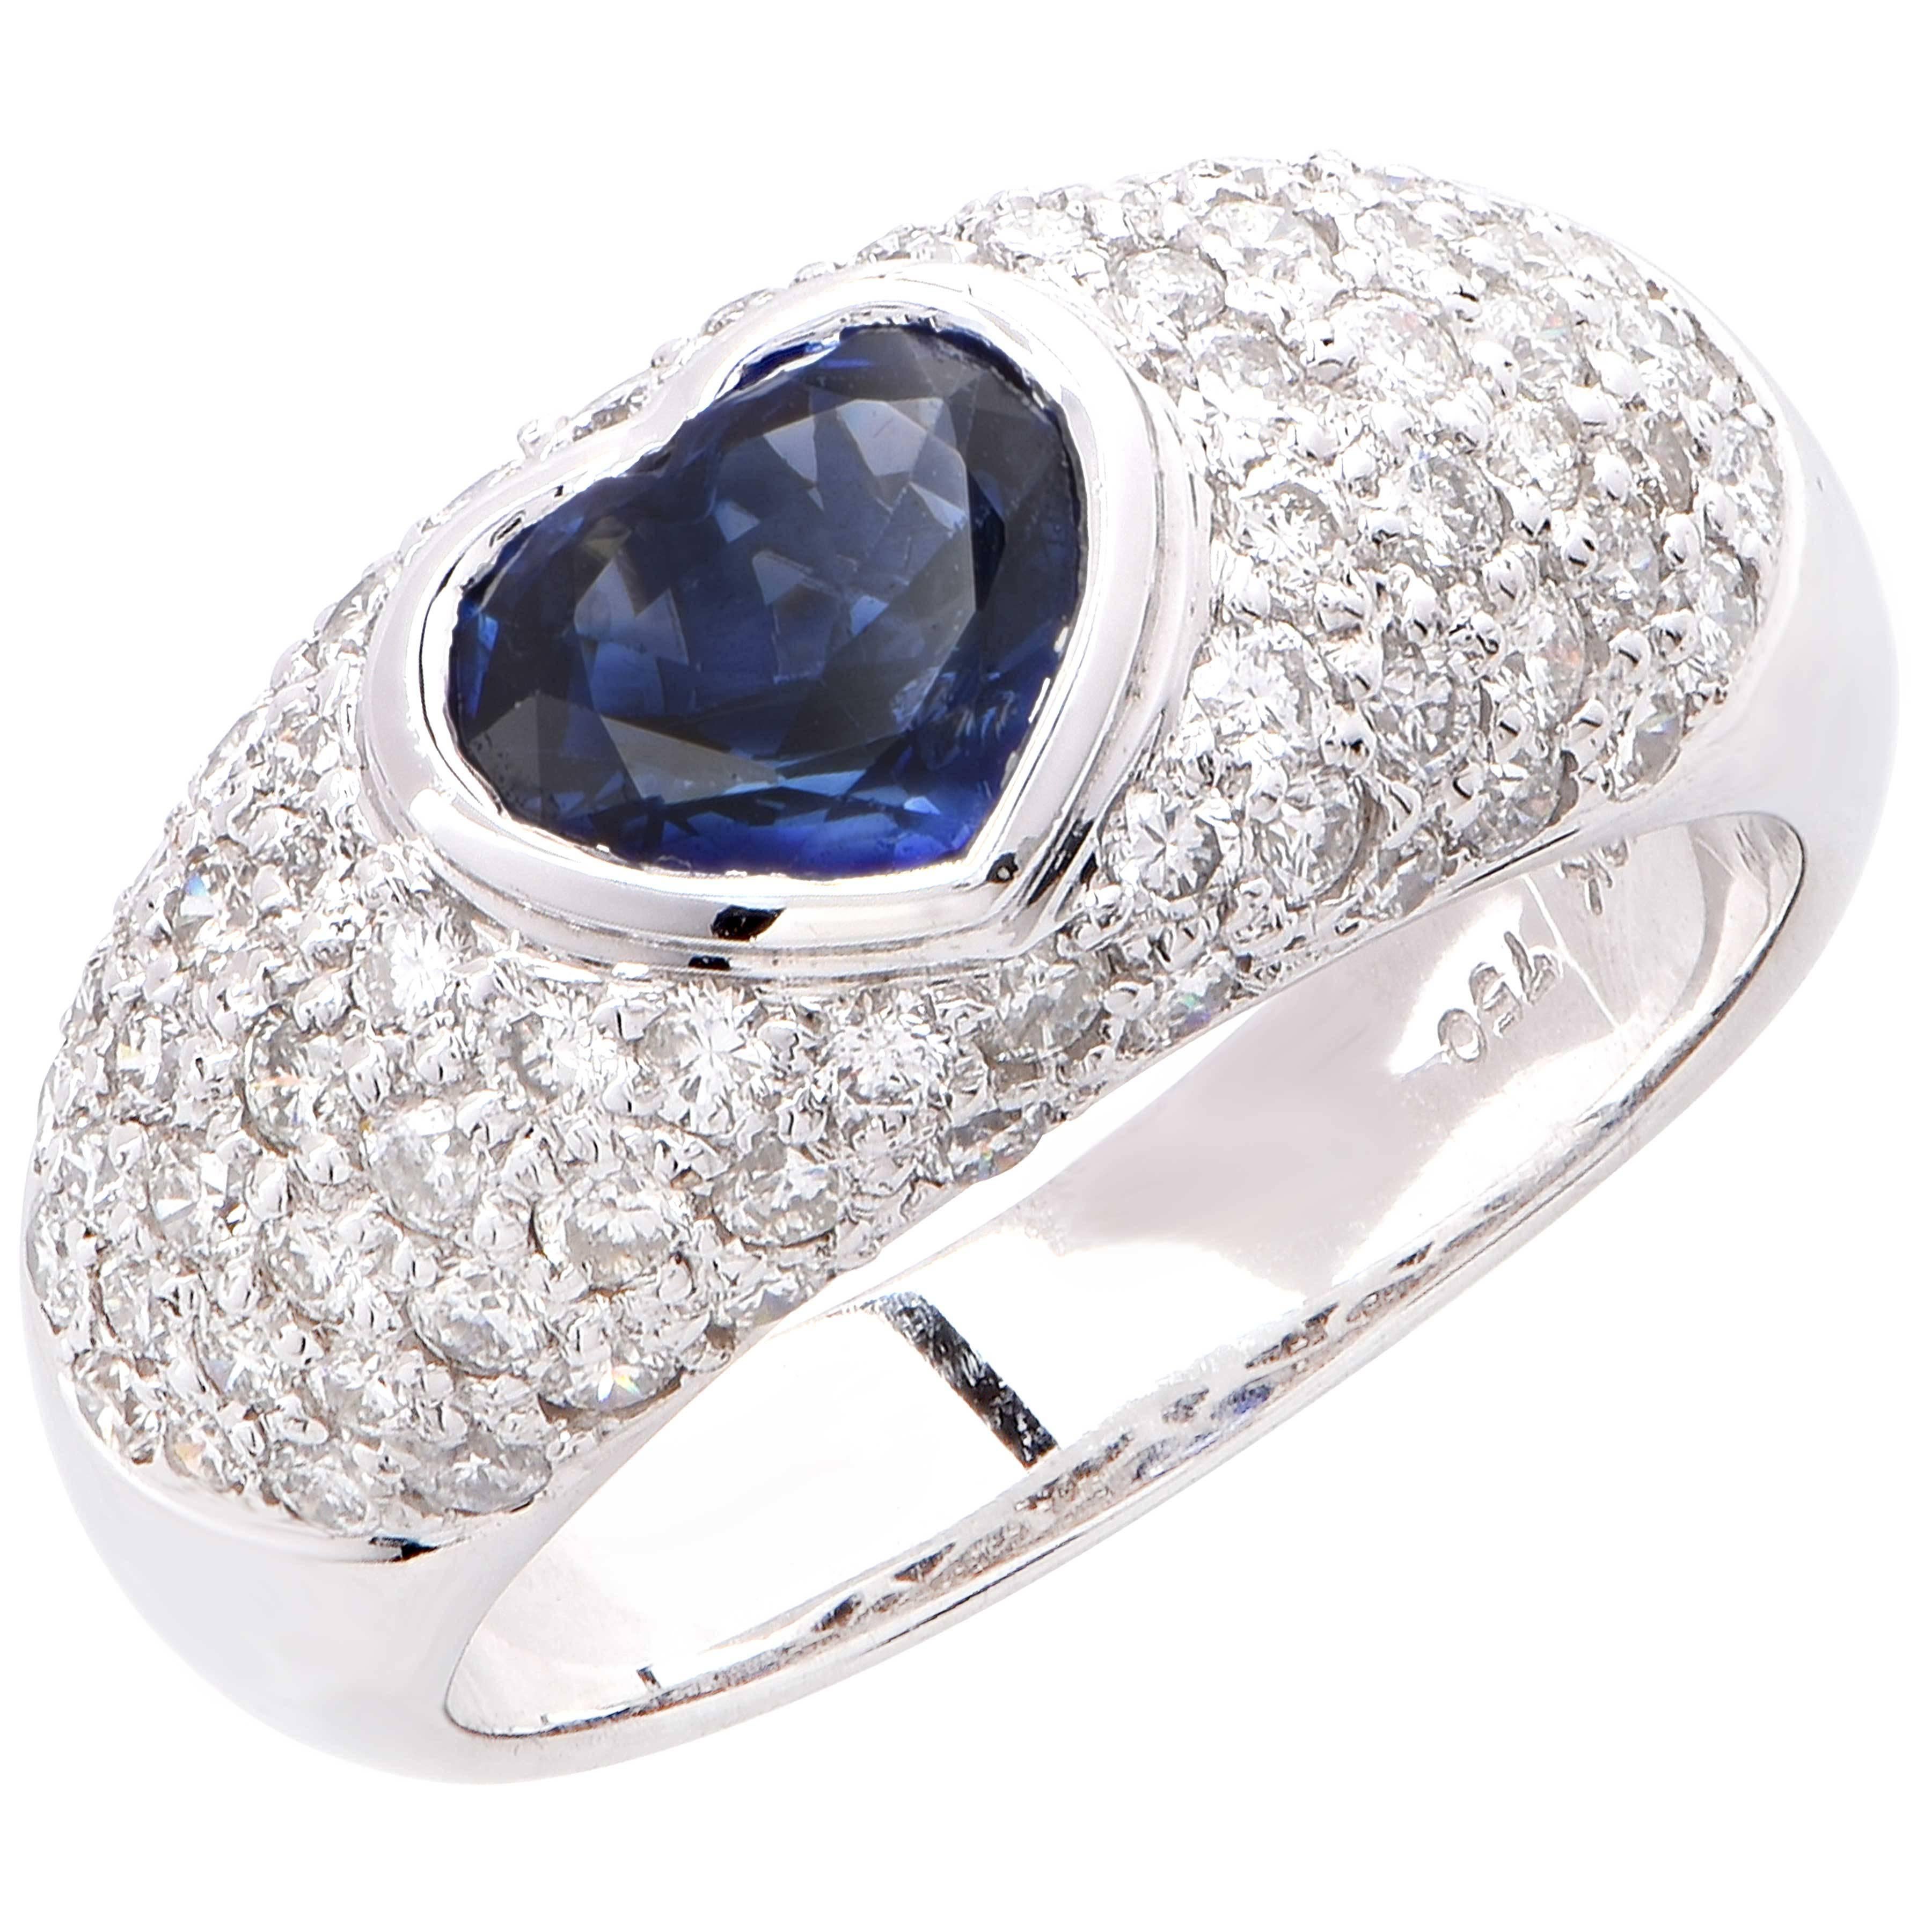 1.5 Carat Heart Shape Blue Sapphire and Diamond Ring